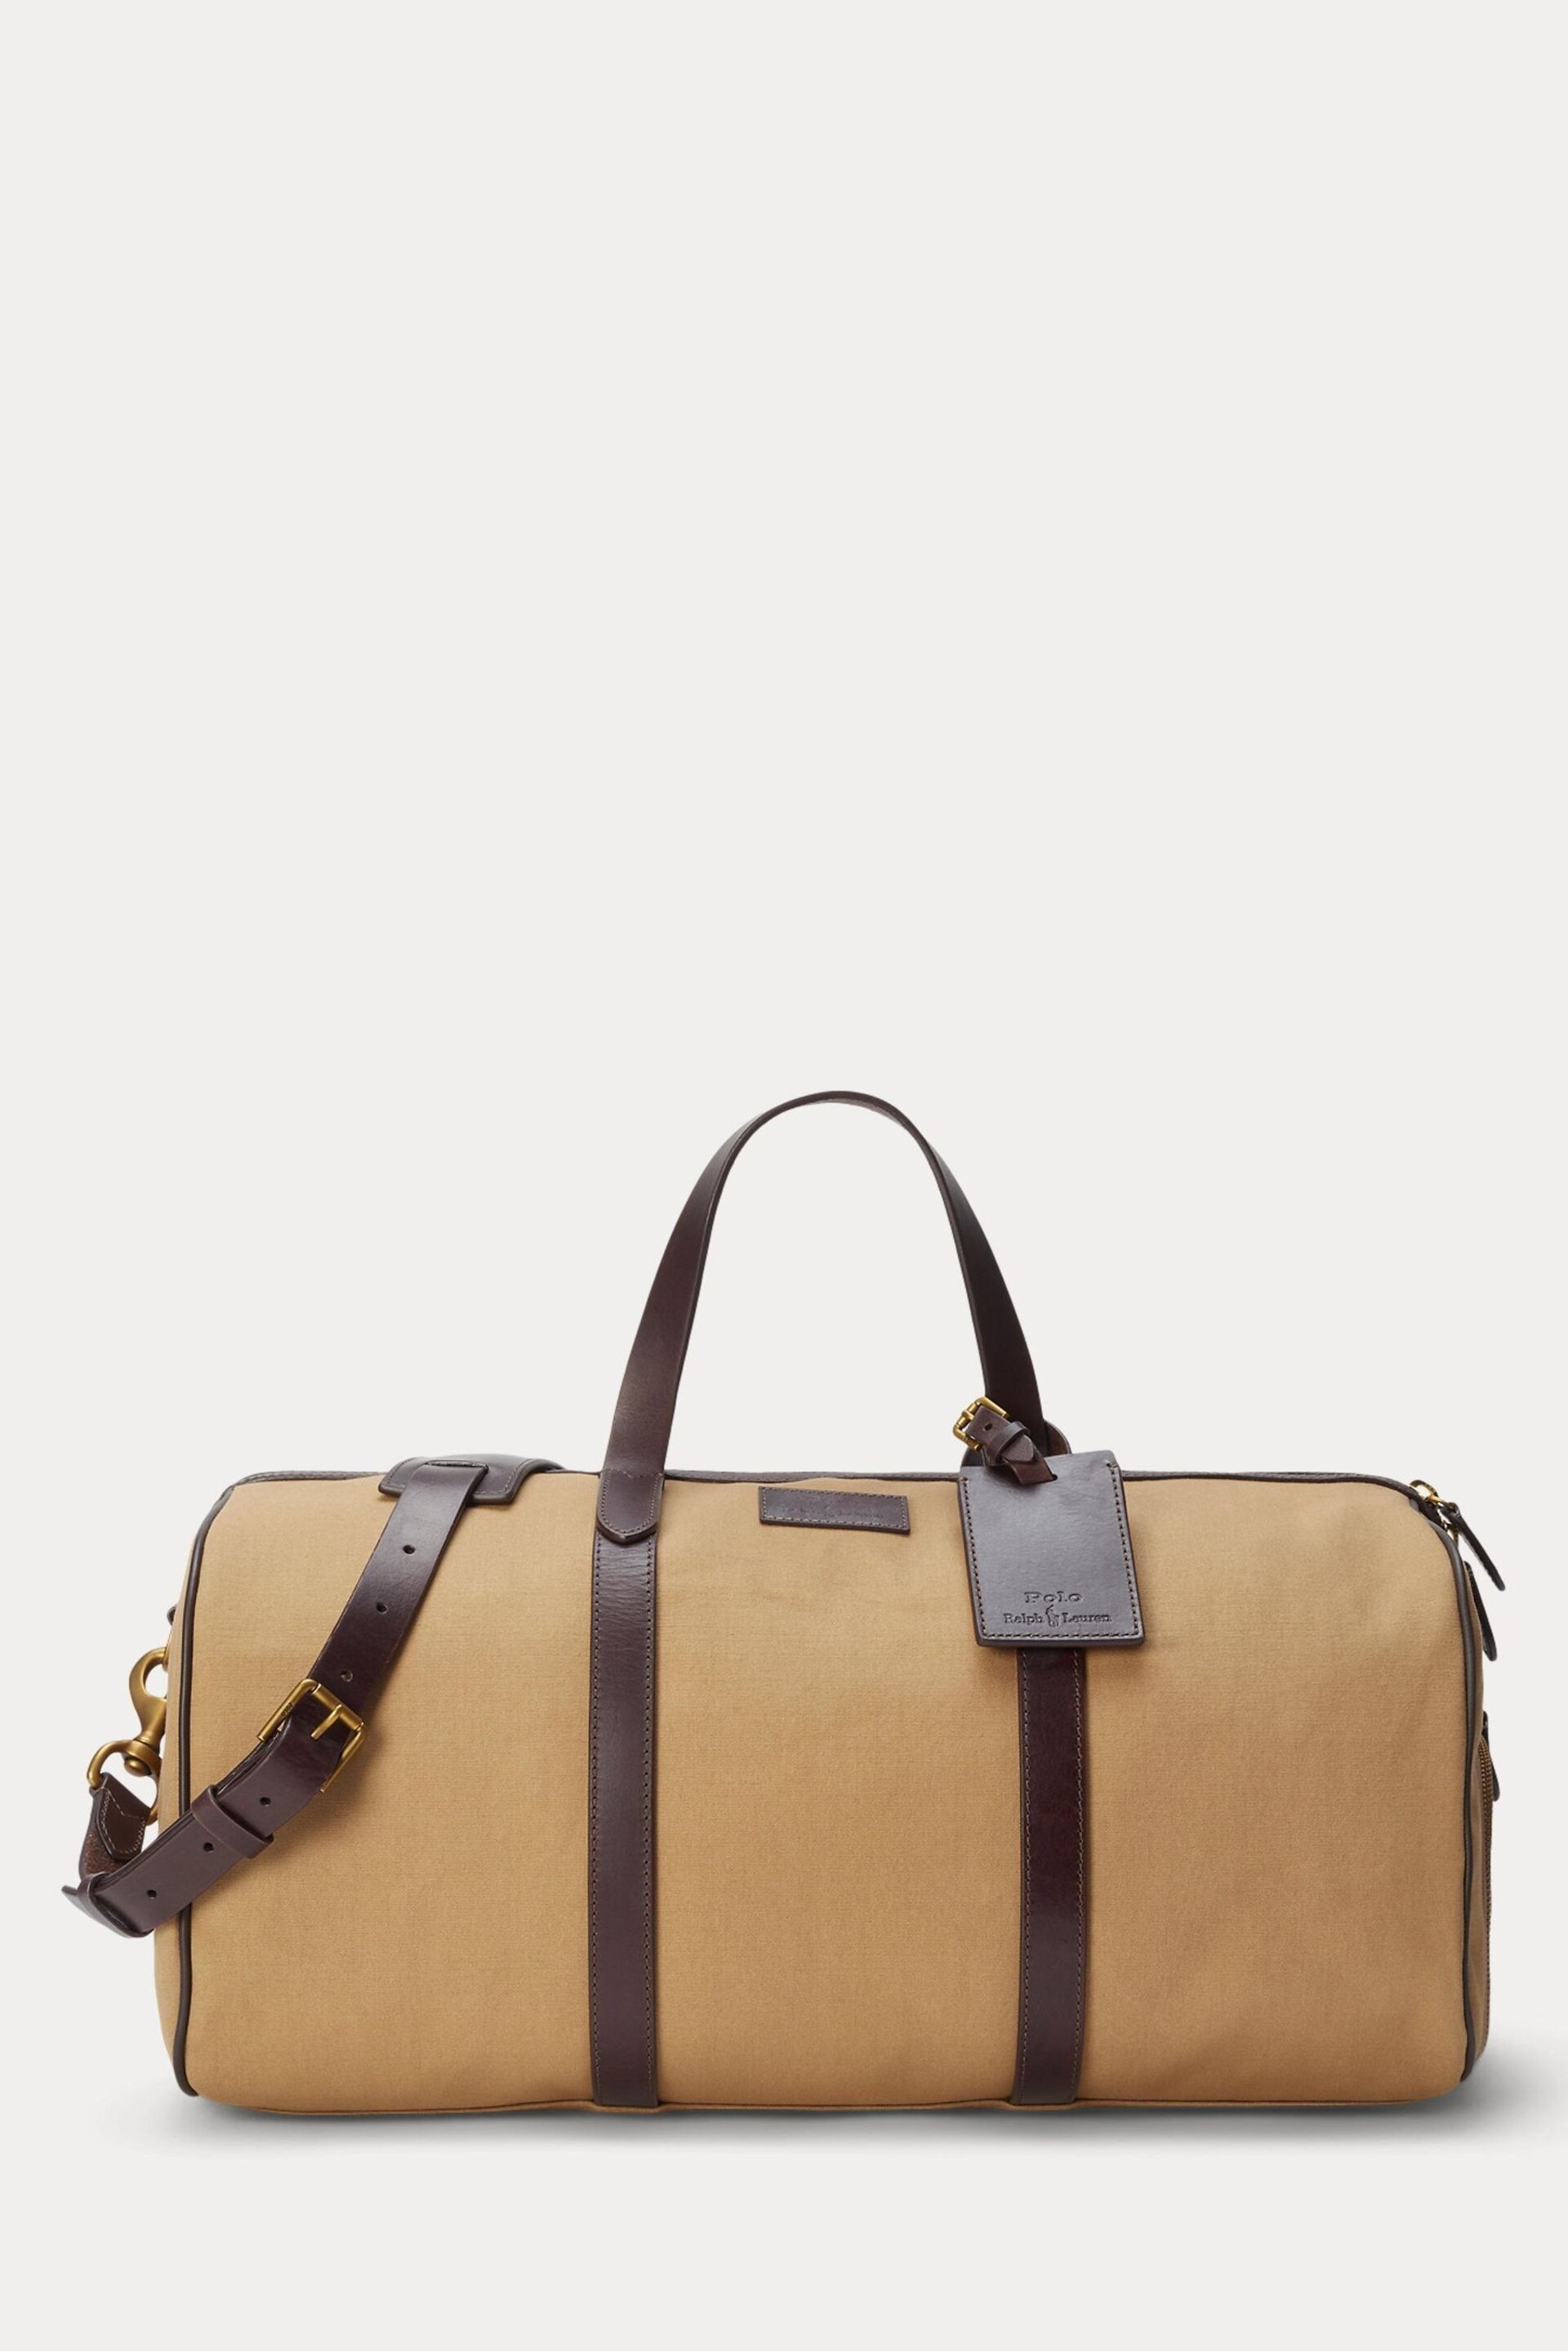 Polo Ralph Lauren Leather-Trim Canvas Duffel Bag - Image 3 of 6